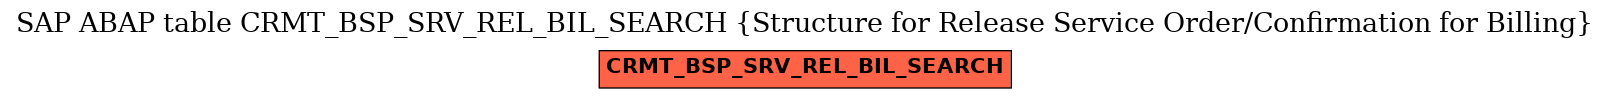 E-R Diagram for table CRMT_BSP_SRV_REL_BIL_SEARCH (Structure for Release Service Order/Confirmation for Billing)